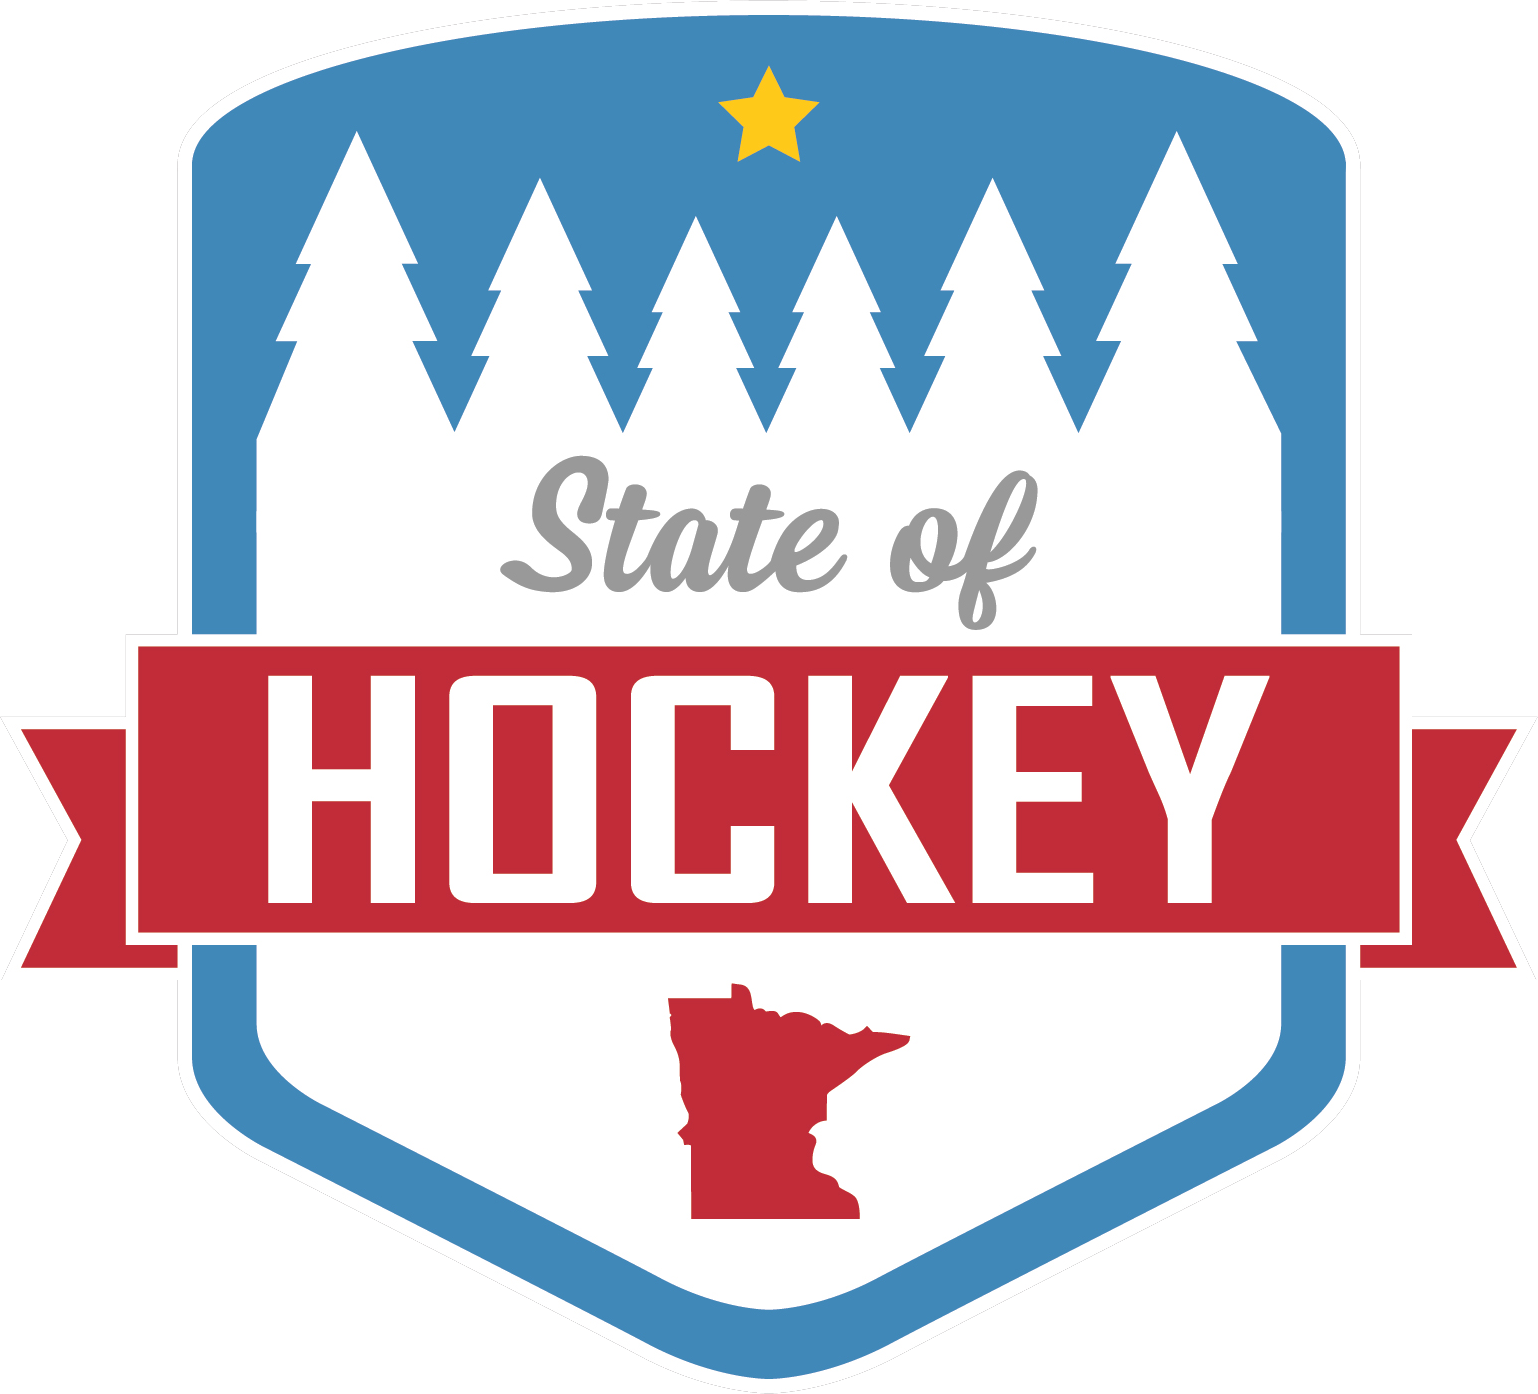 State Of Hockey - Minnesota State Mavericks Men's Ice Hockey (1538x1394), Png Download